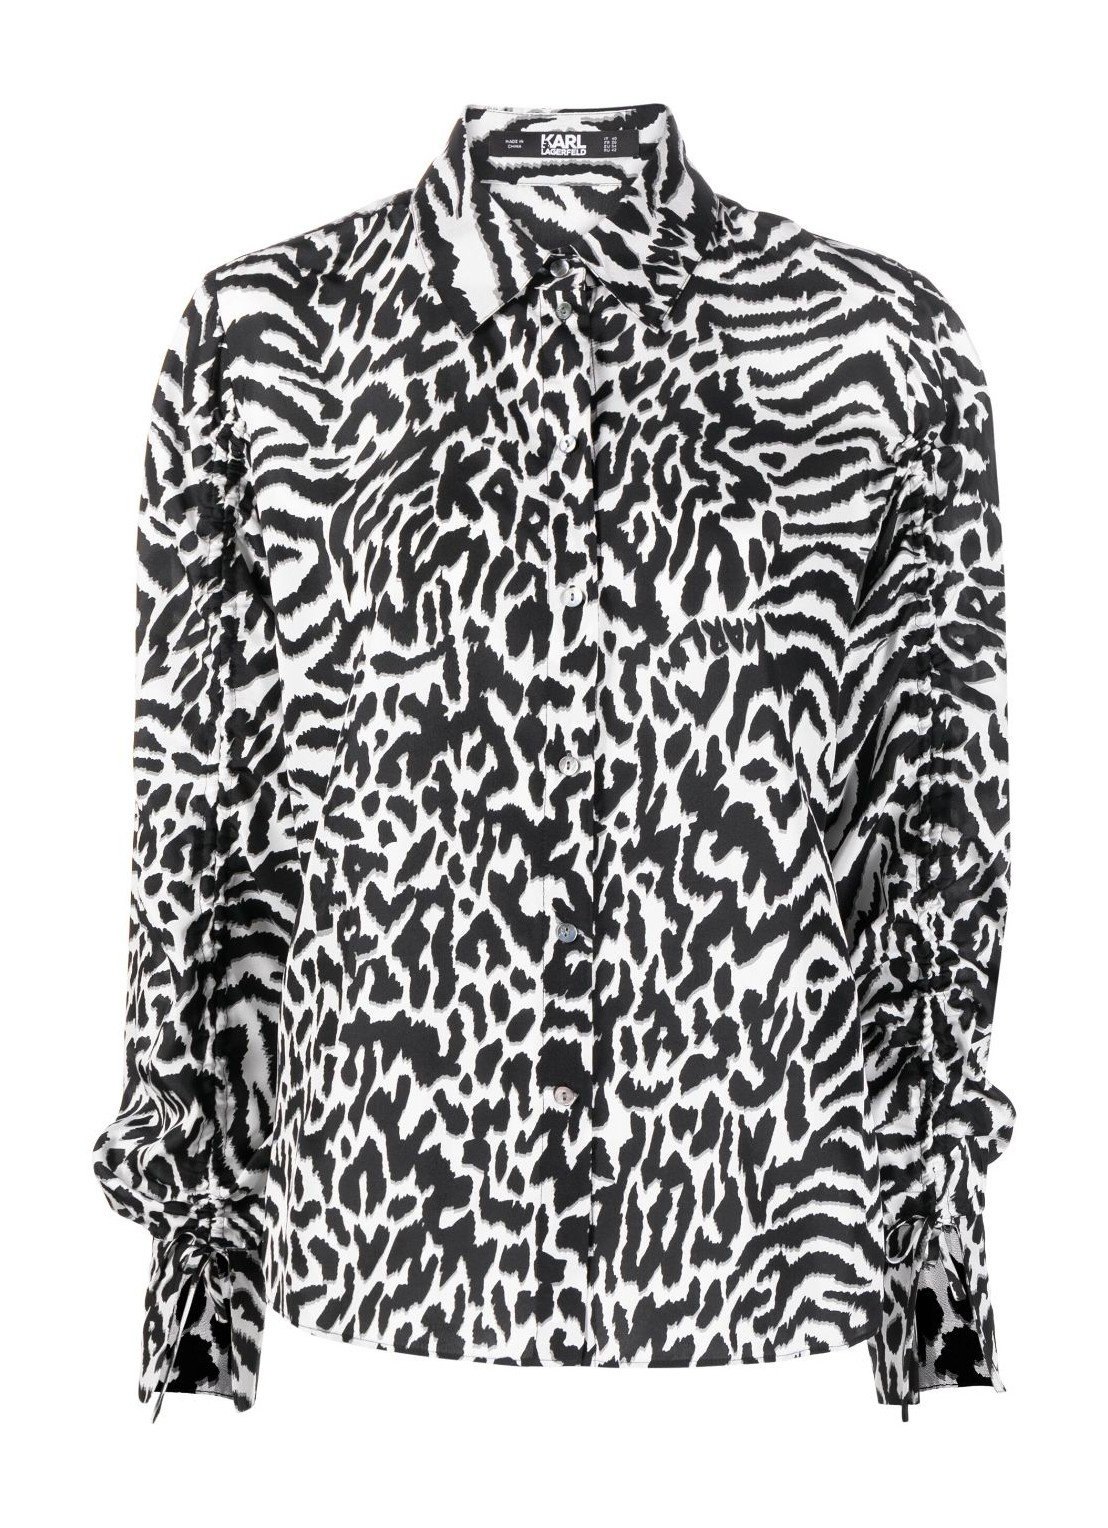 Camiseria karl lagerfeld shirt woman animal print silk shirt 240w1604 r04 talla multi
 